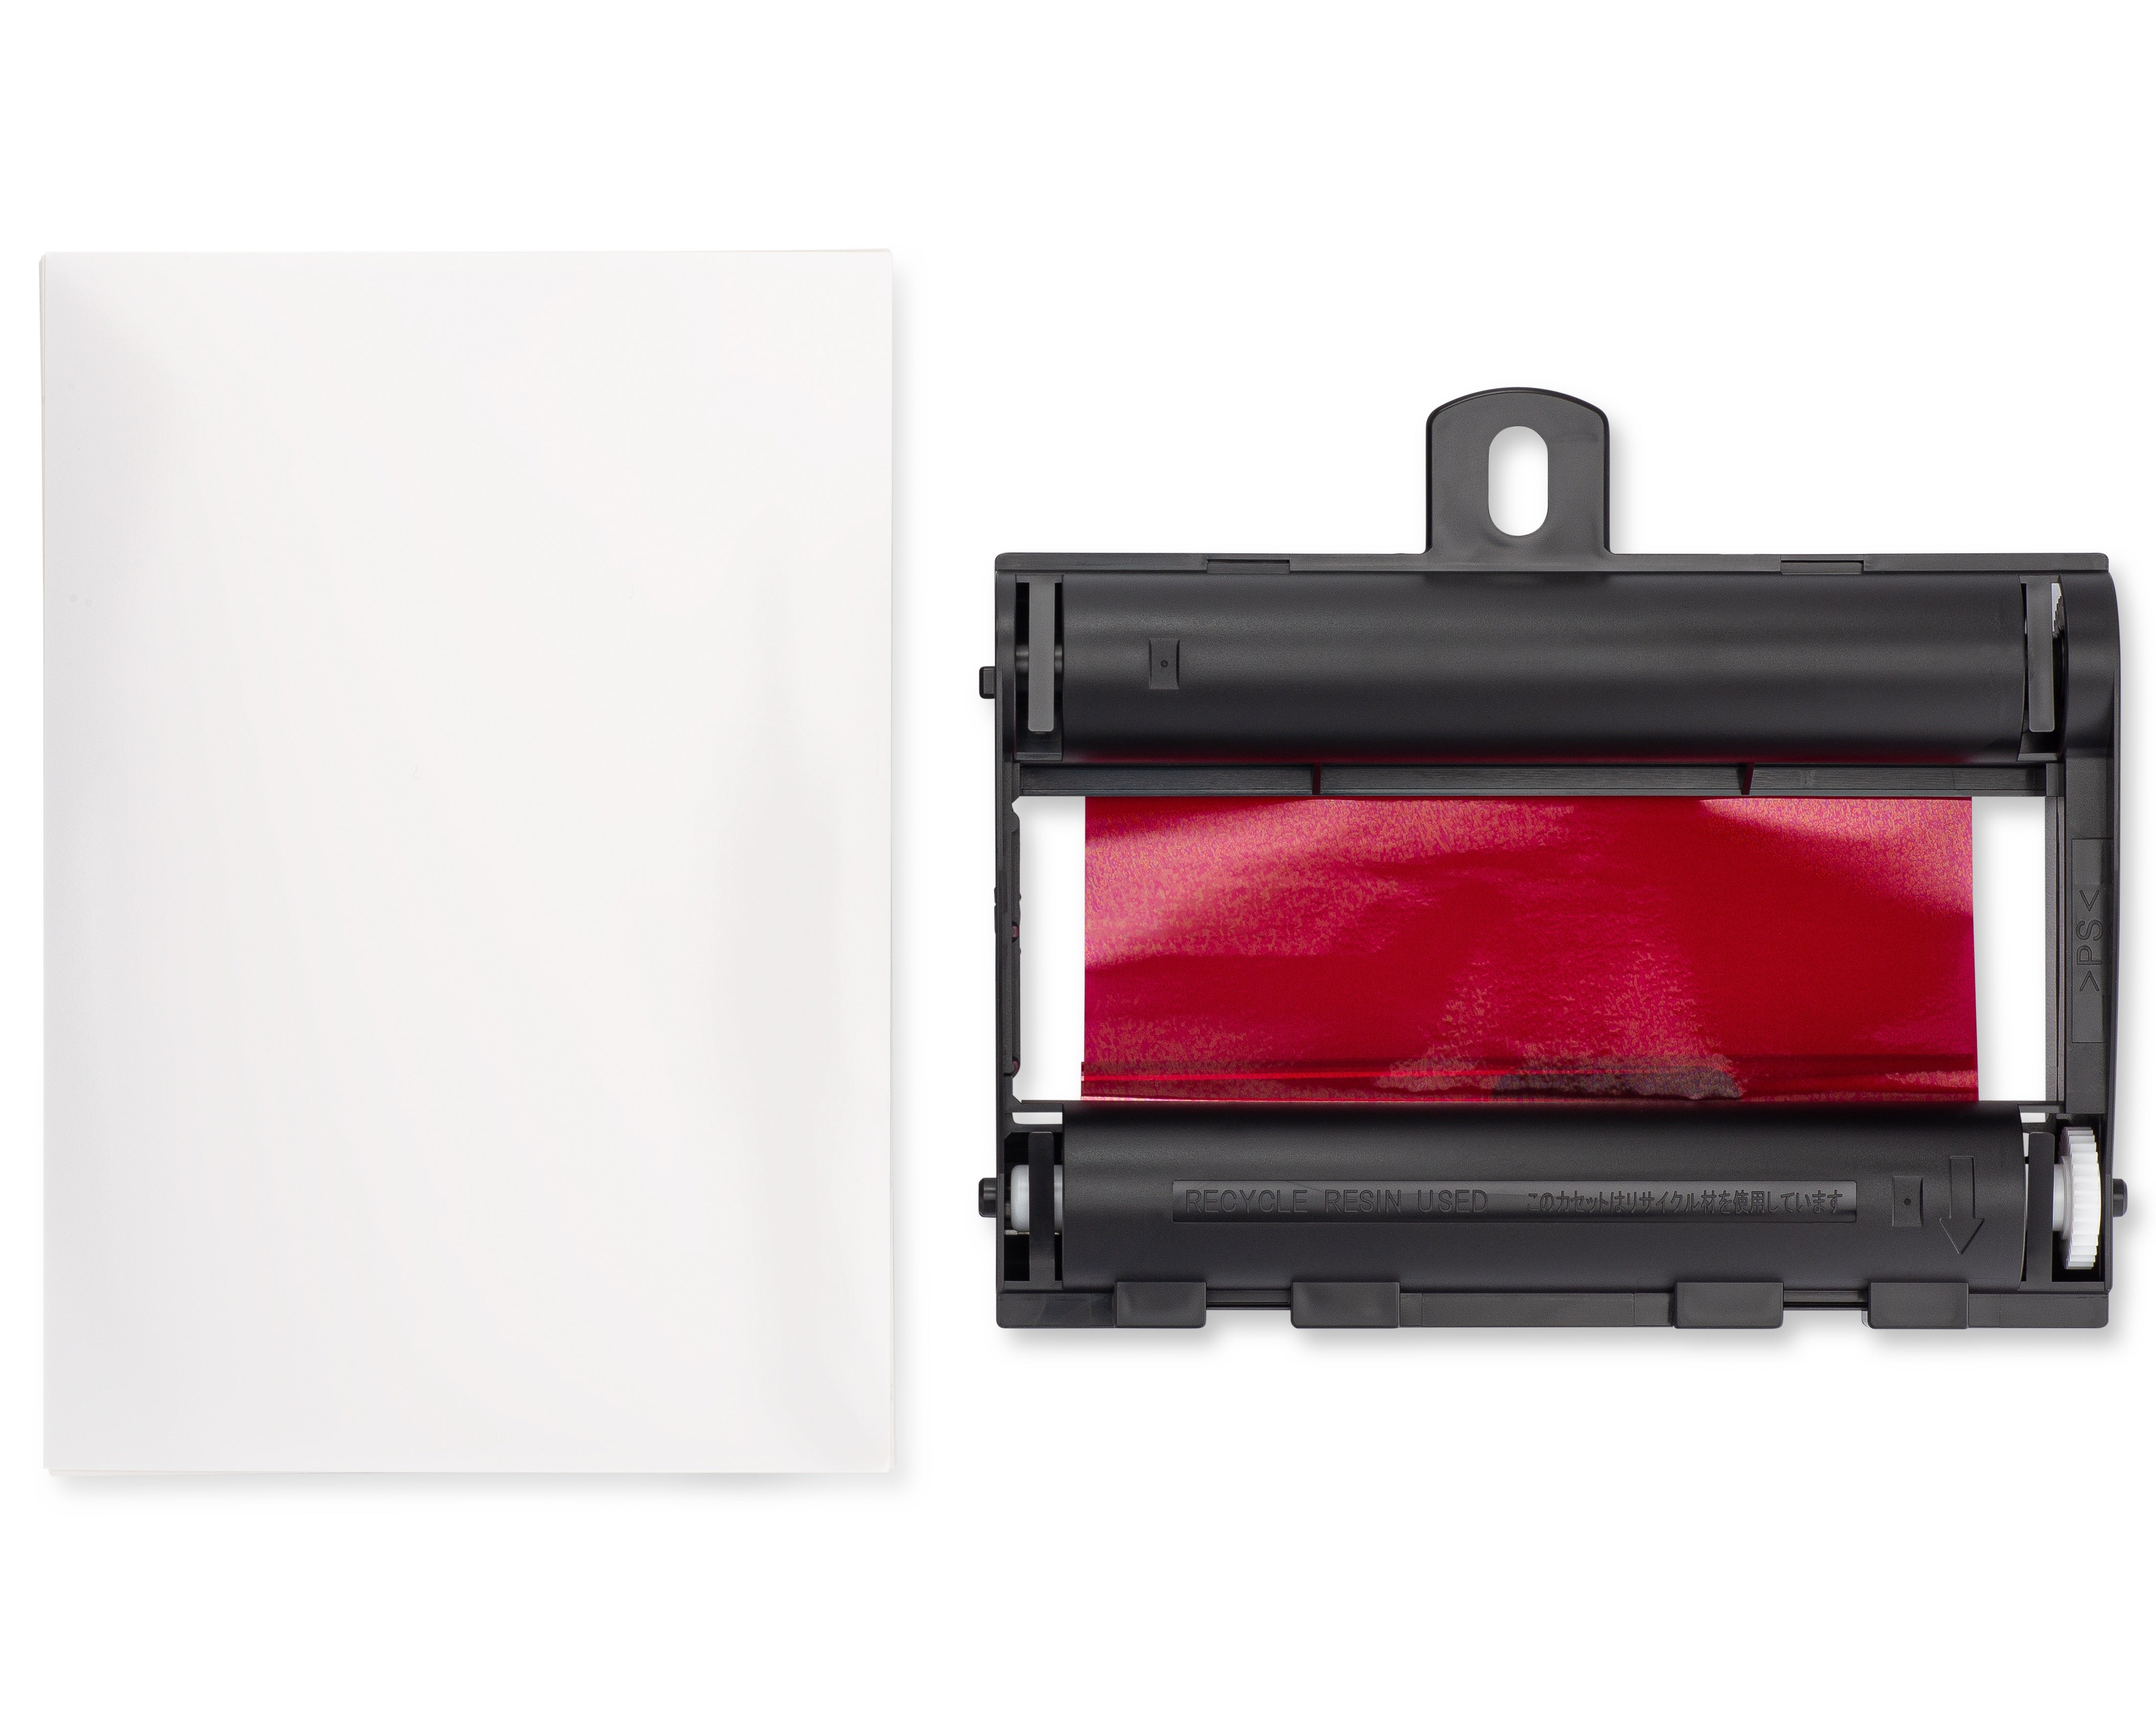 Sony UPC-1010 Color Printer Paper - Alternup Medical